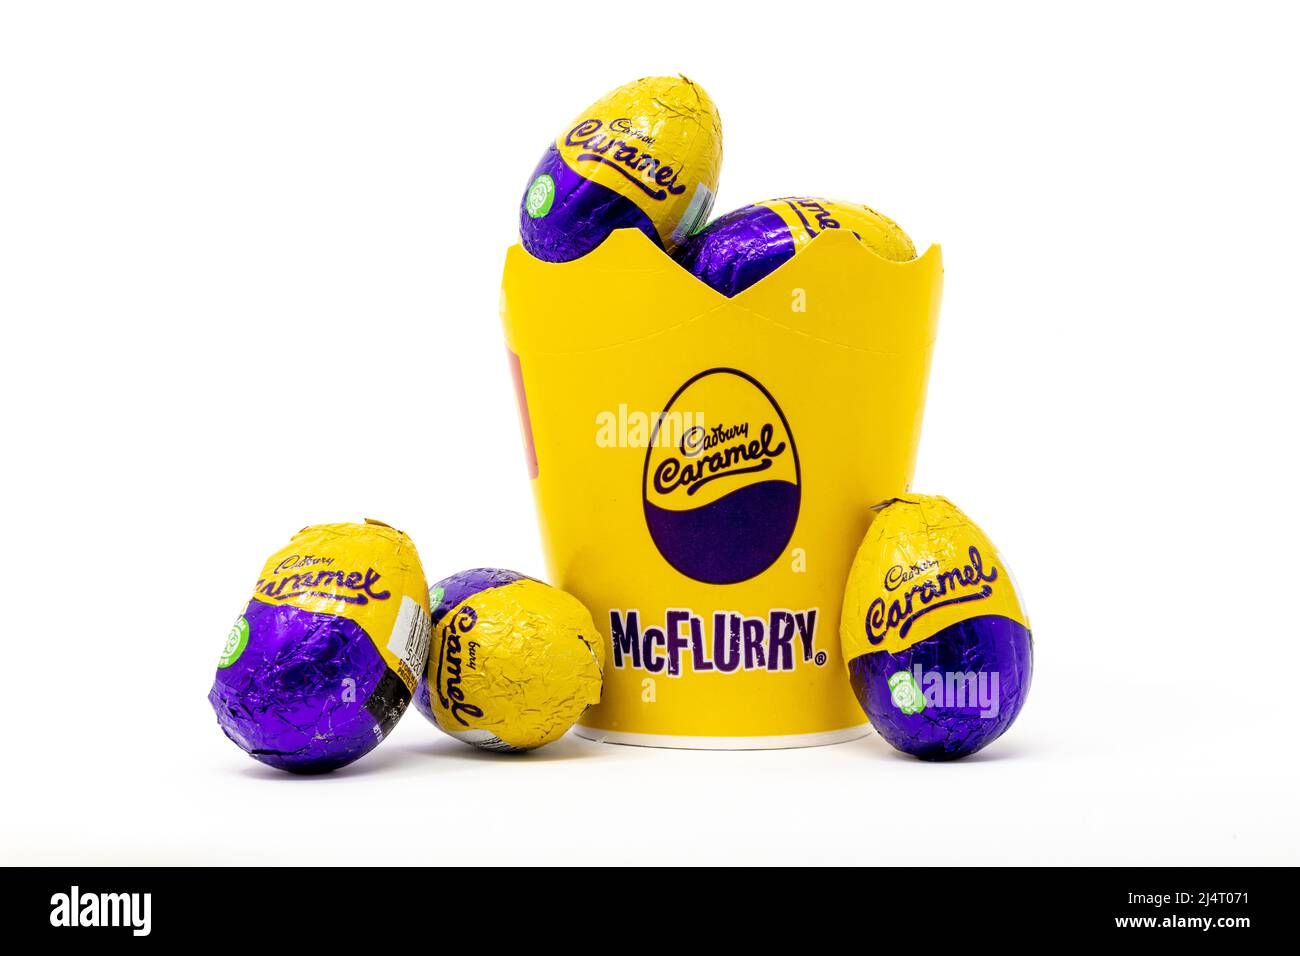 McDonalds Cadbury Caramel Egg McFlurry cup filled with Cadbury Caramel  Eggs Stock Photo